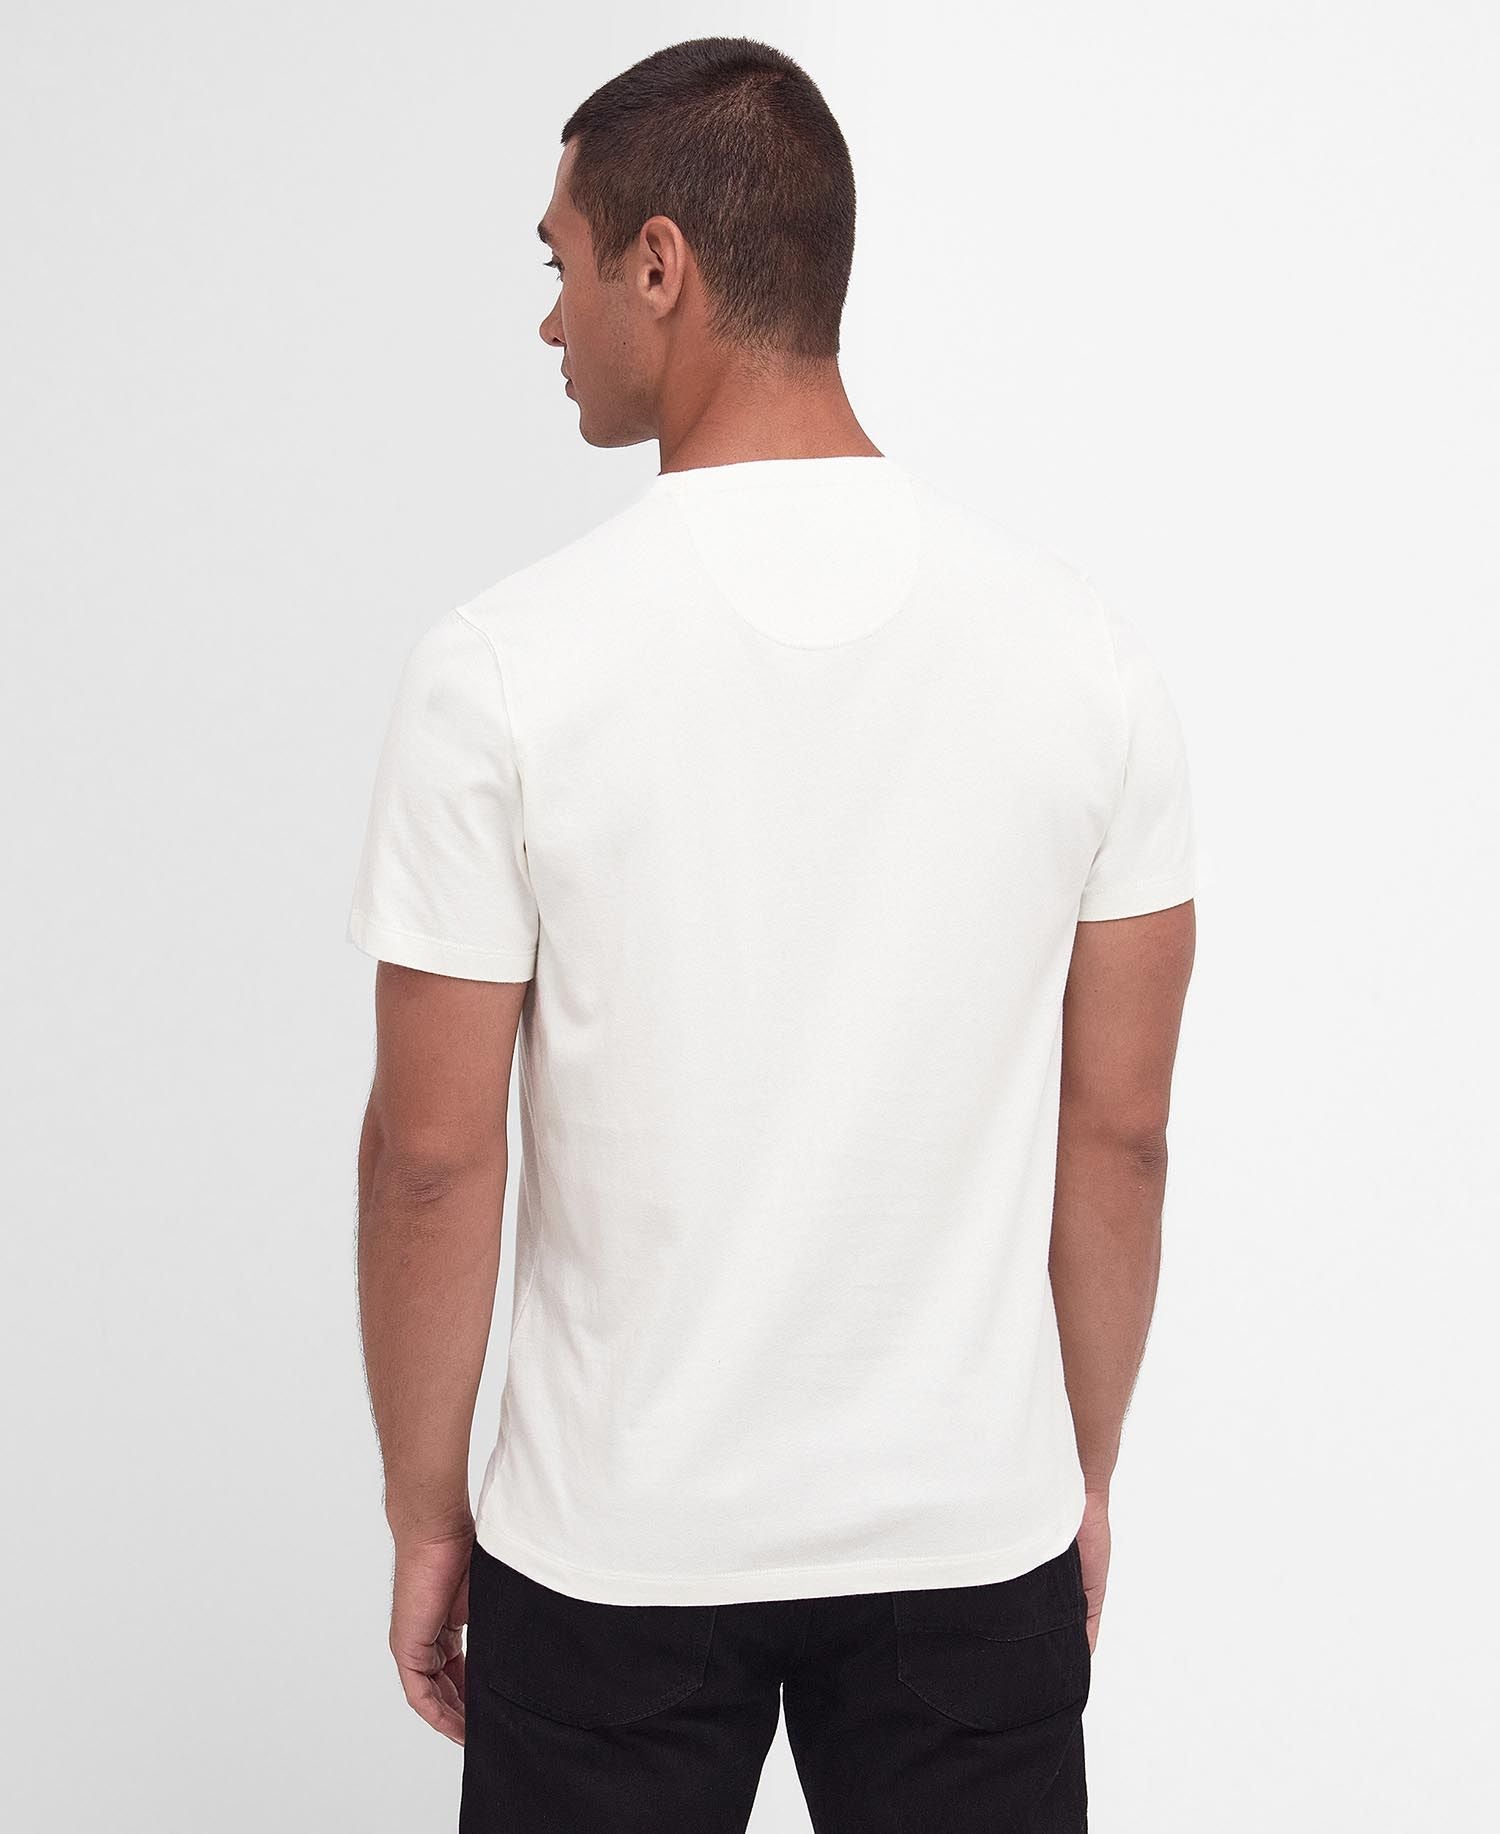 Barbour International SMQ Charge T-Shirt - Whisper White